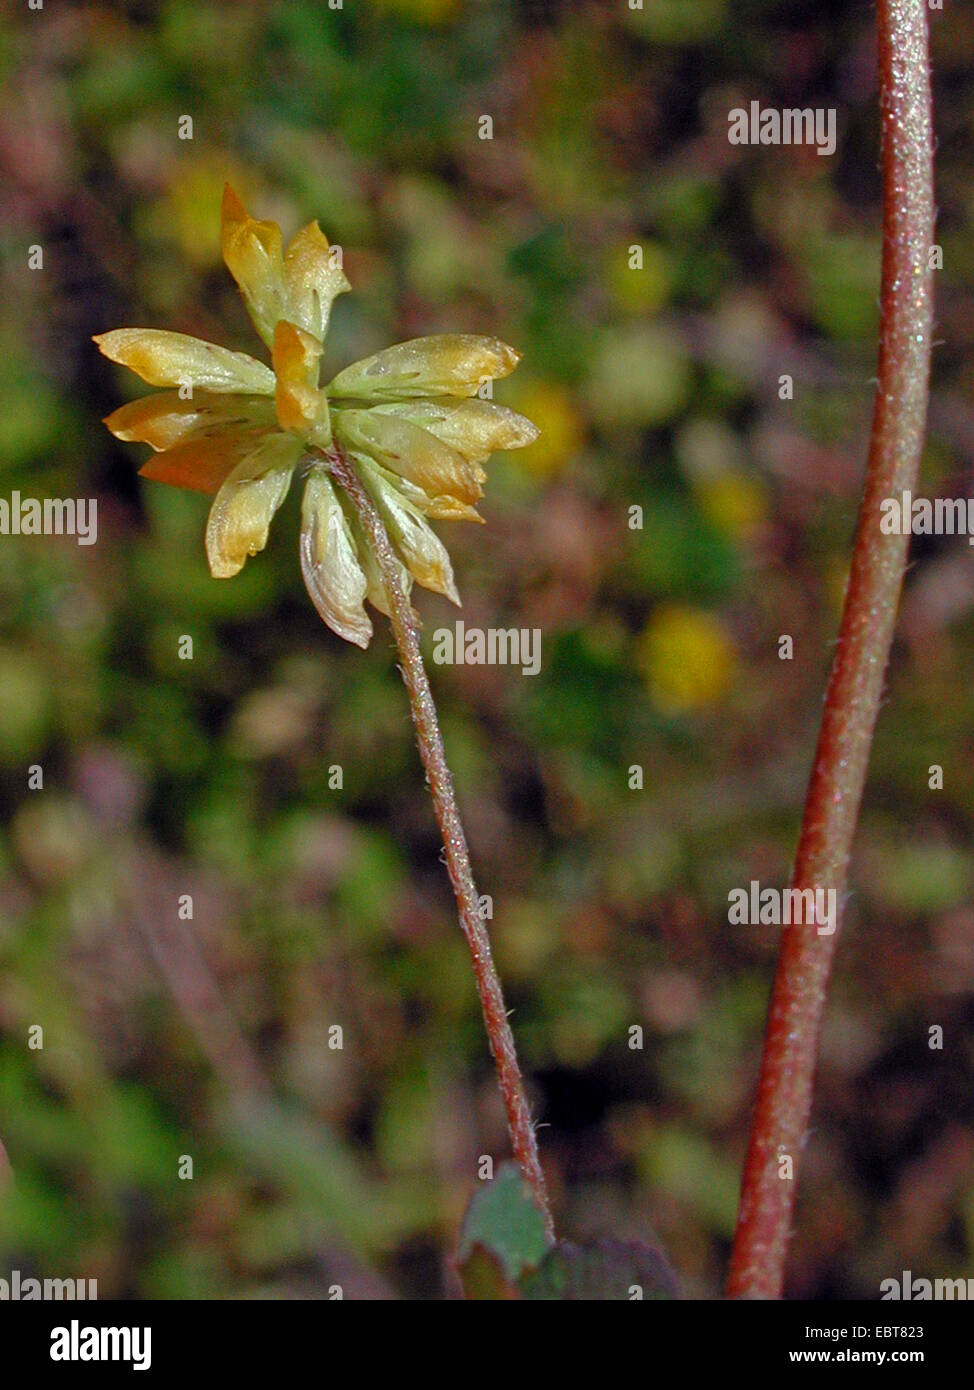 least hop clover, lesser trefoil, lesser yellow trefoil, small hop clover, suckling clover, shamrock (Trifolium dubium), inflorescence, Germany Stock Photo